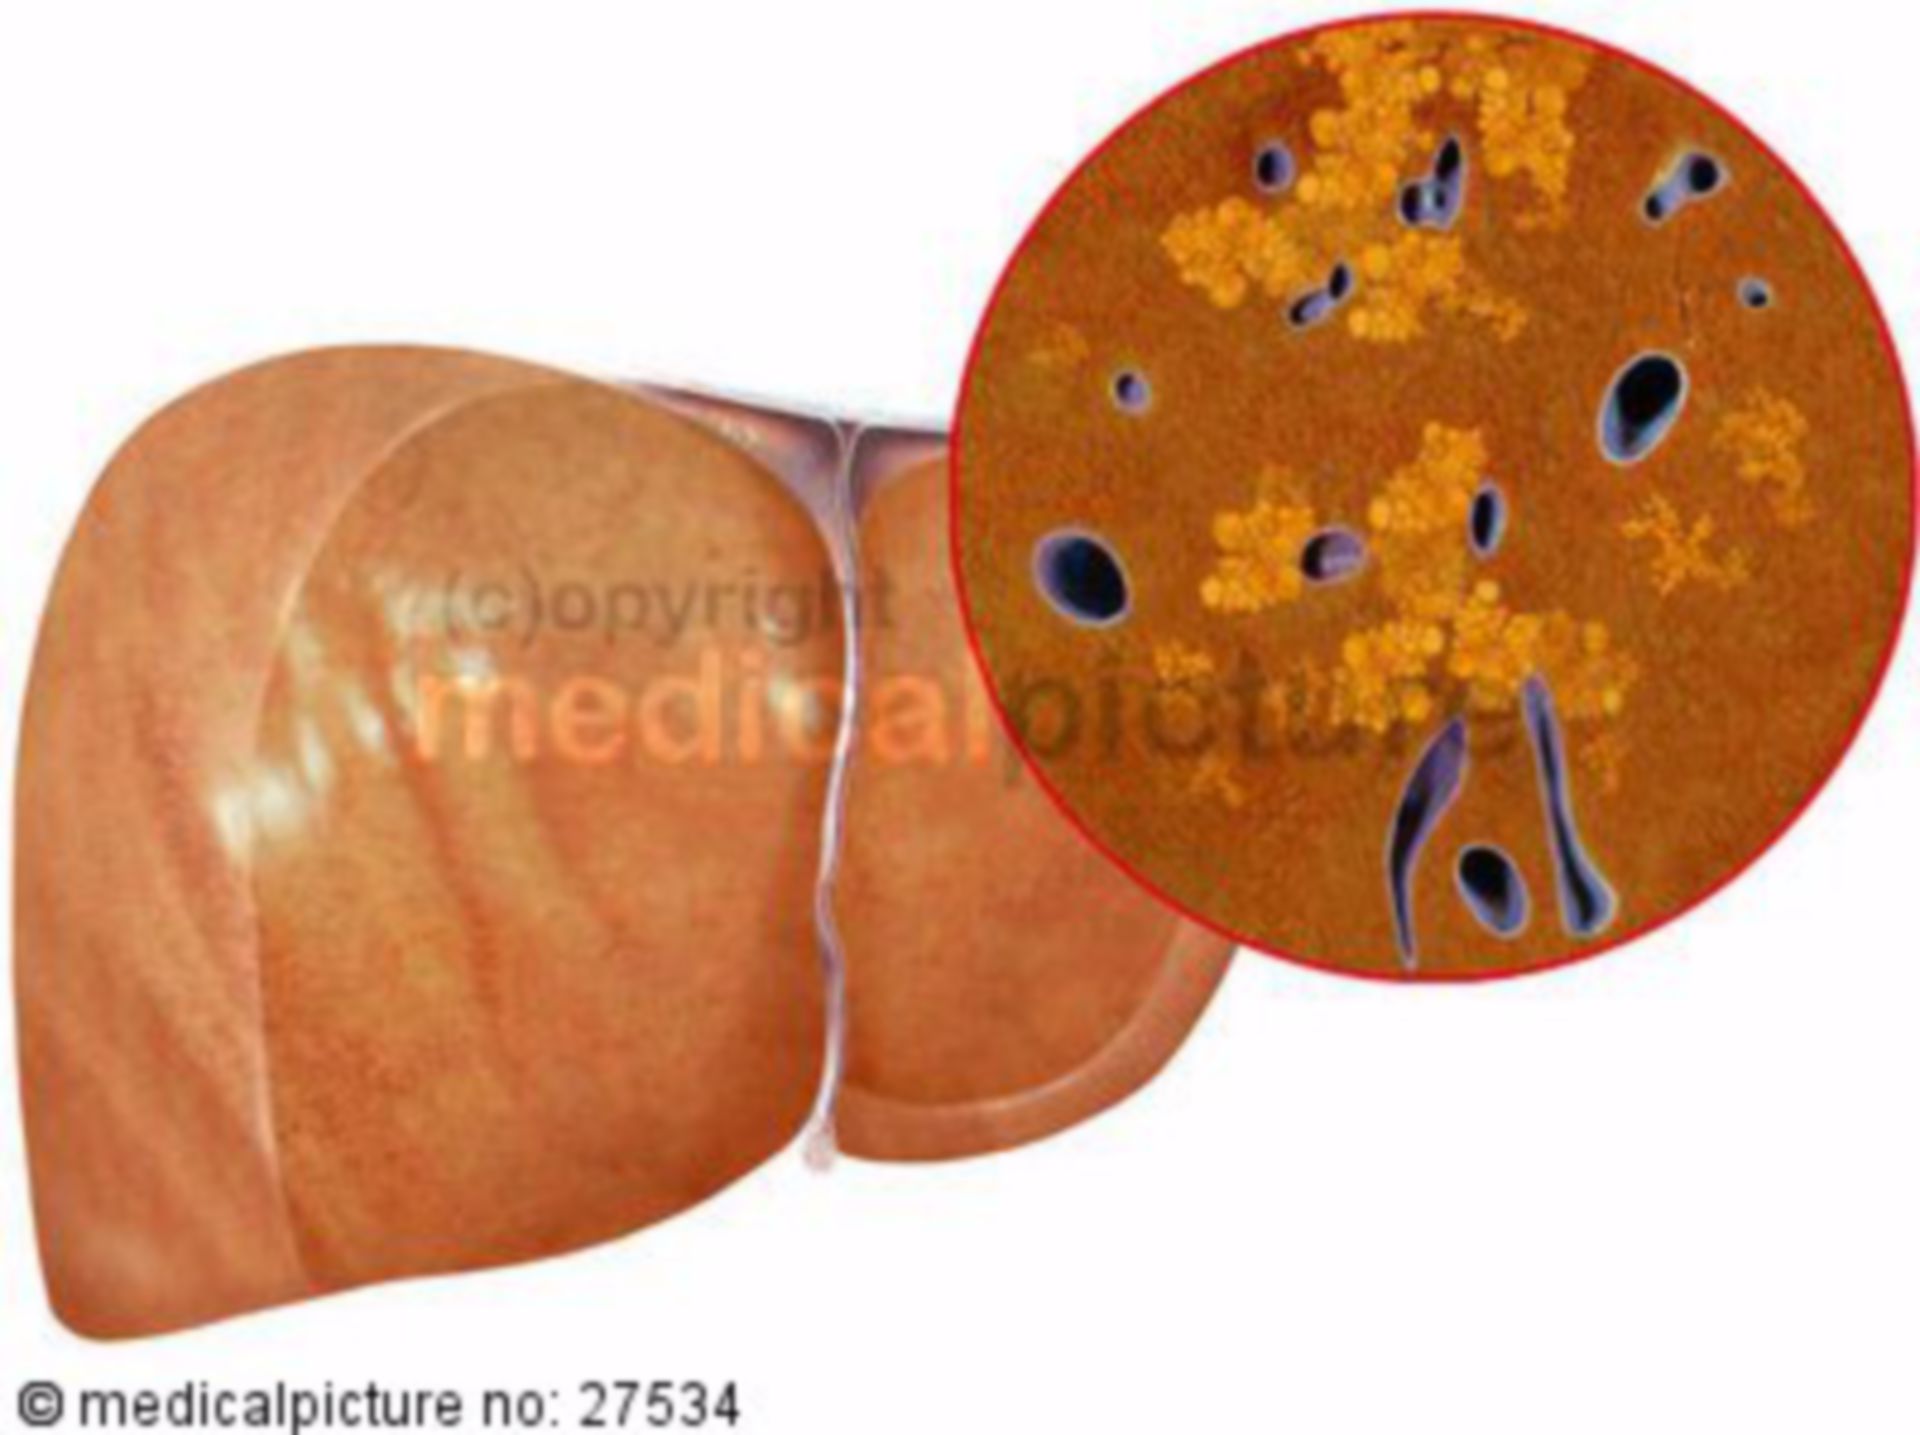 Fatty liver, organ and histology